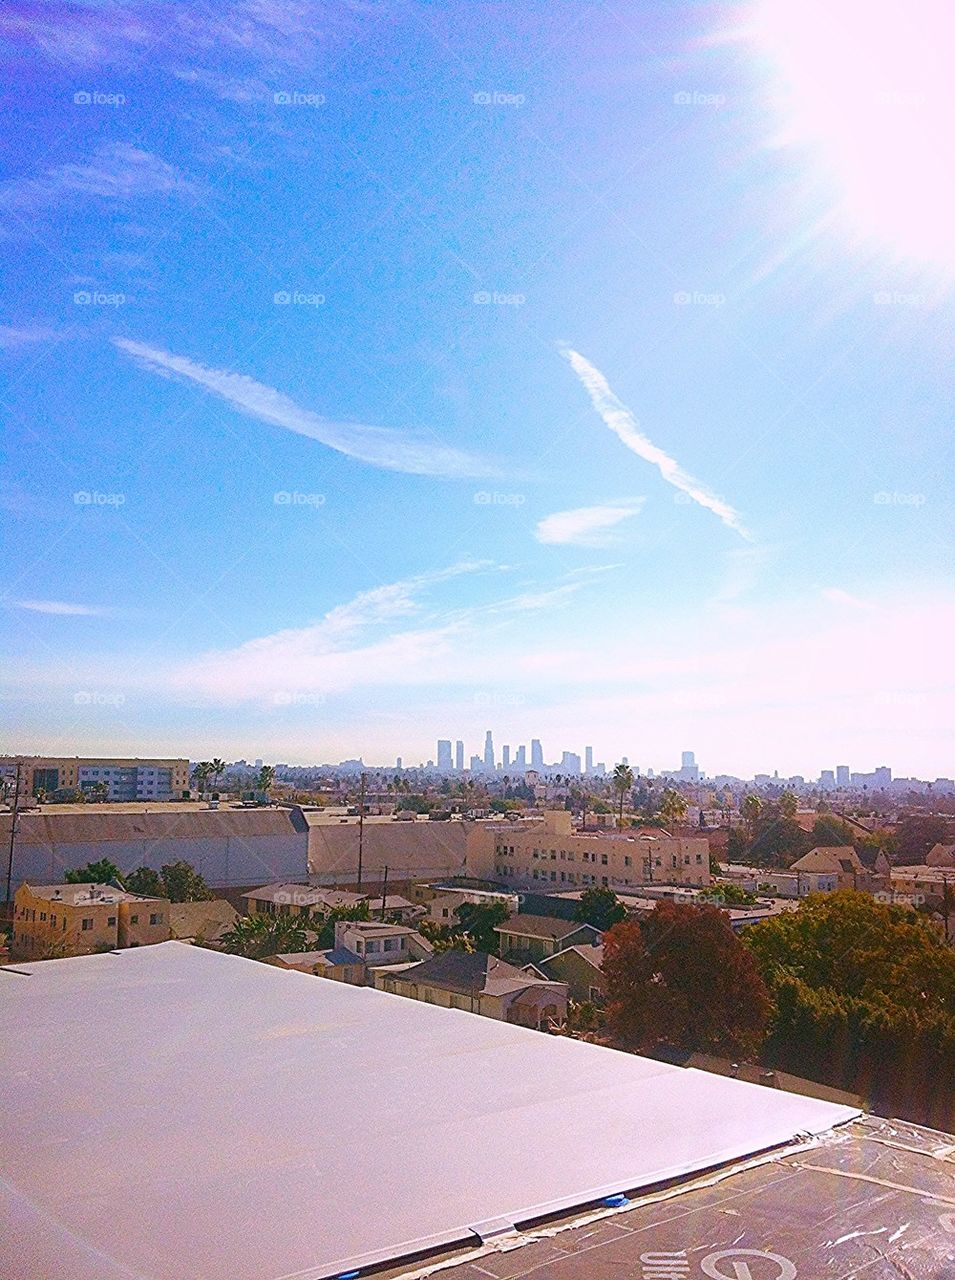 Downtown LA from far far away